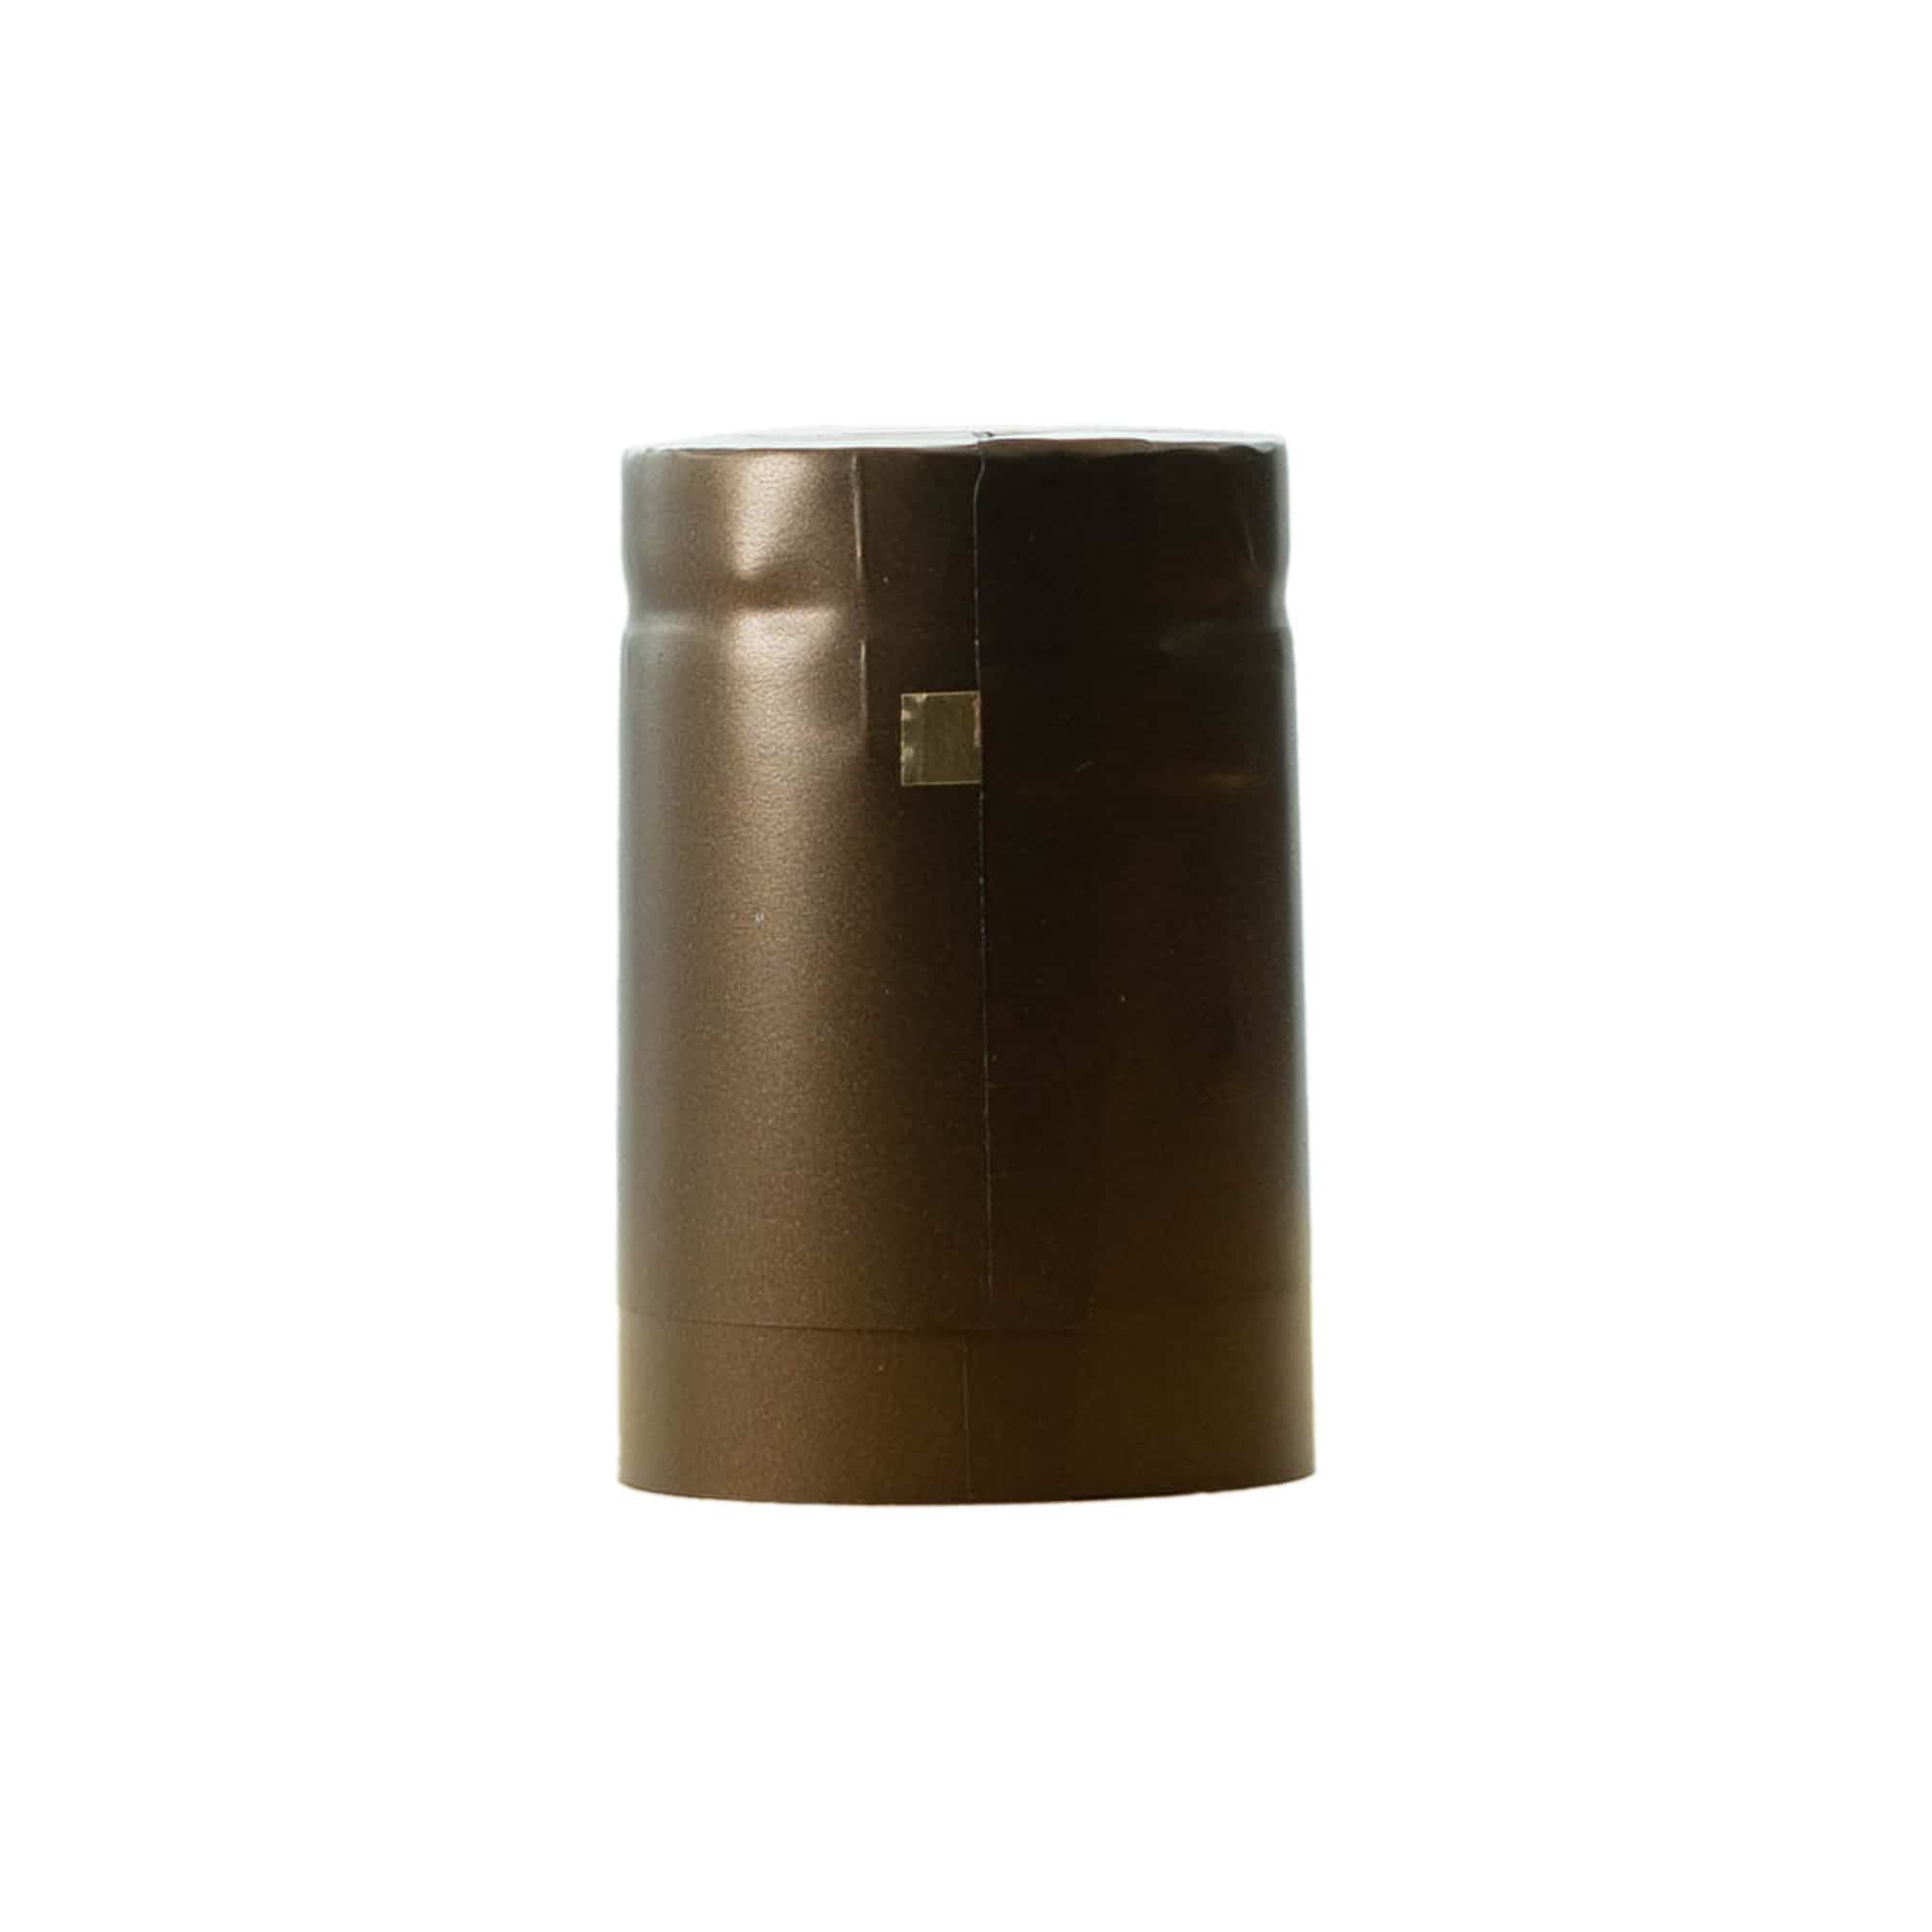 Krimpcapsule 32x41, pvc-kunststof, dukatengoud